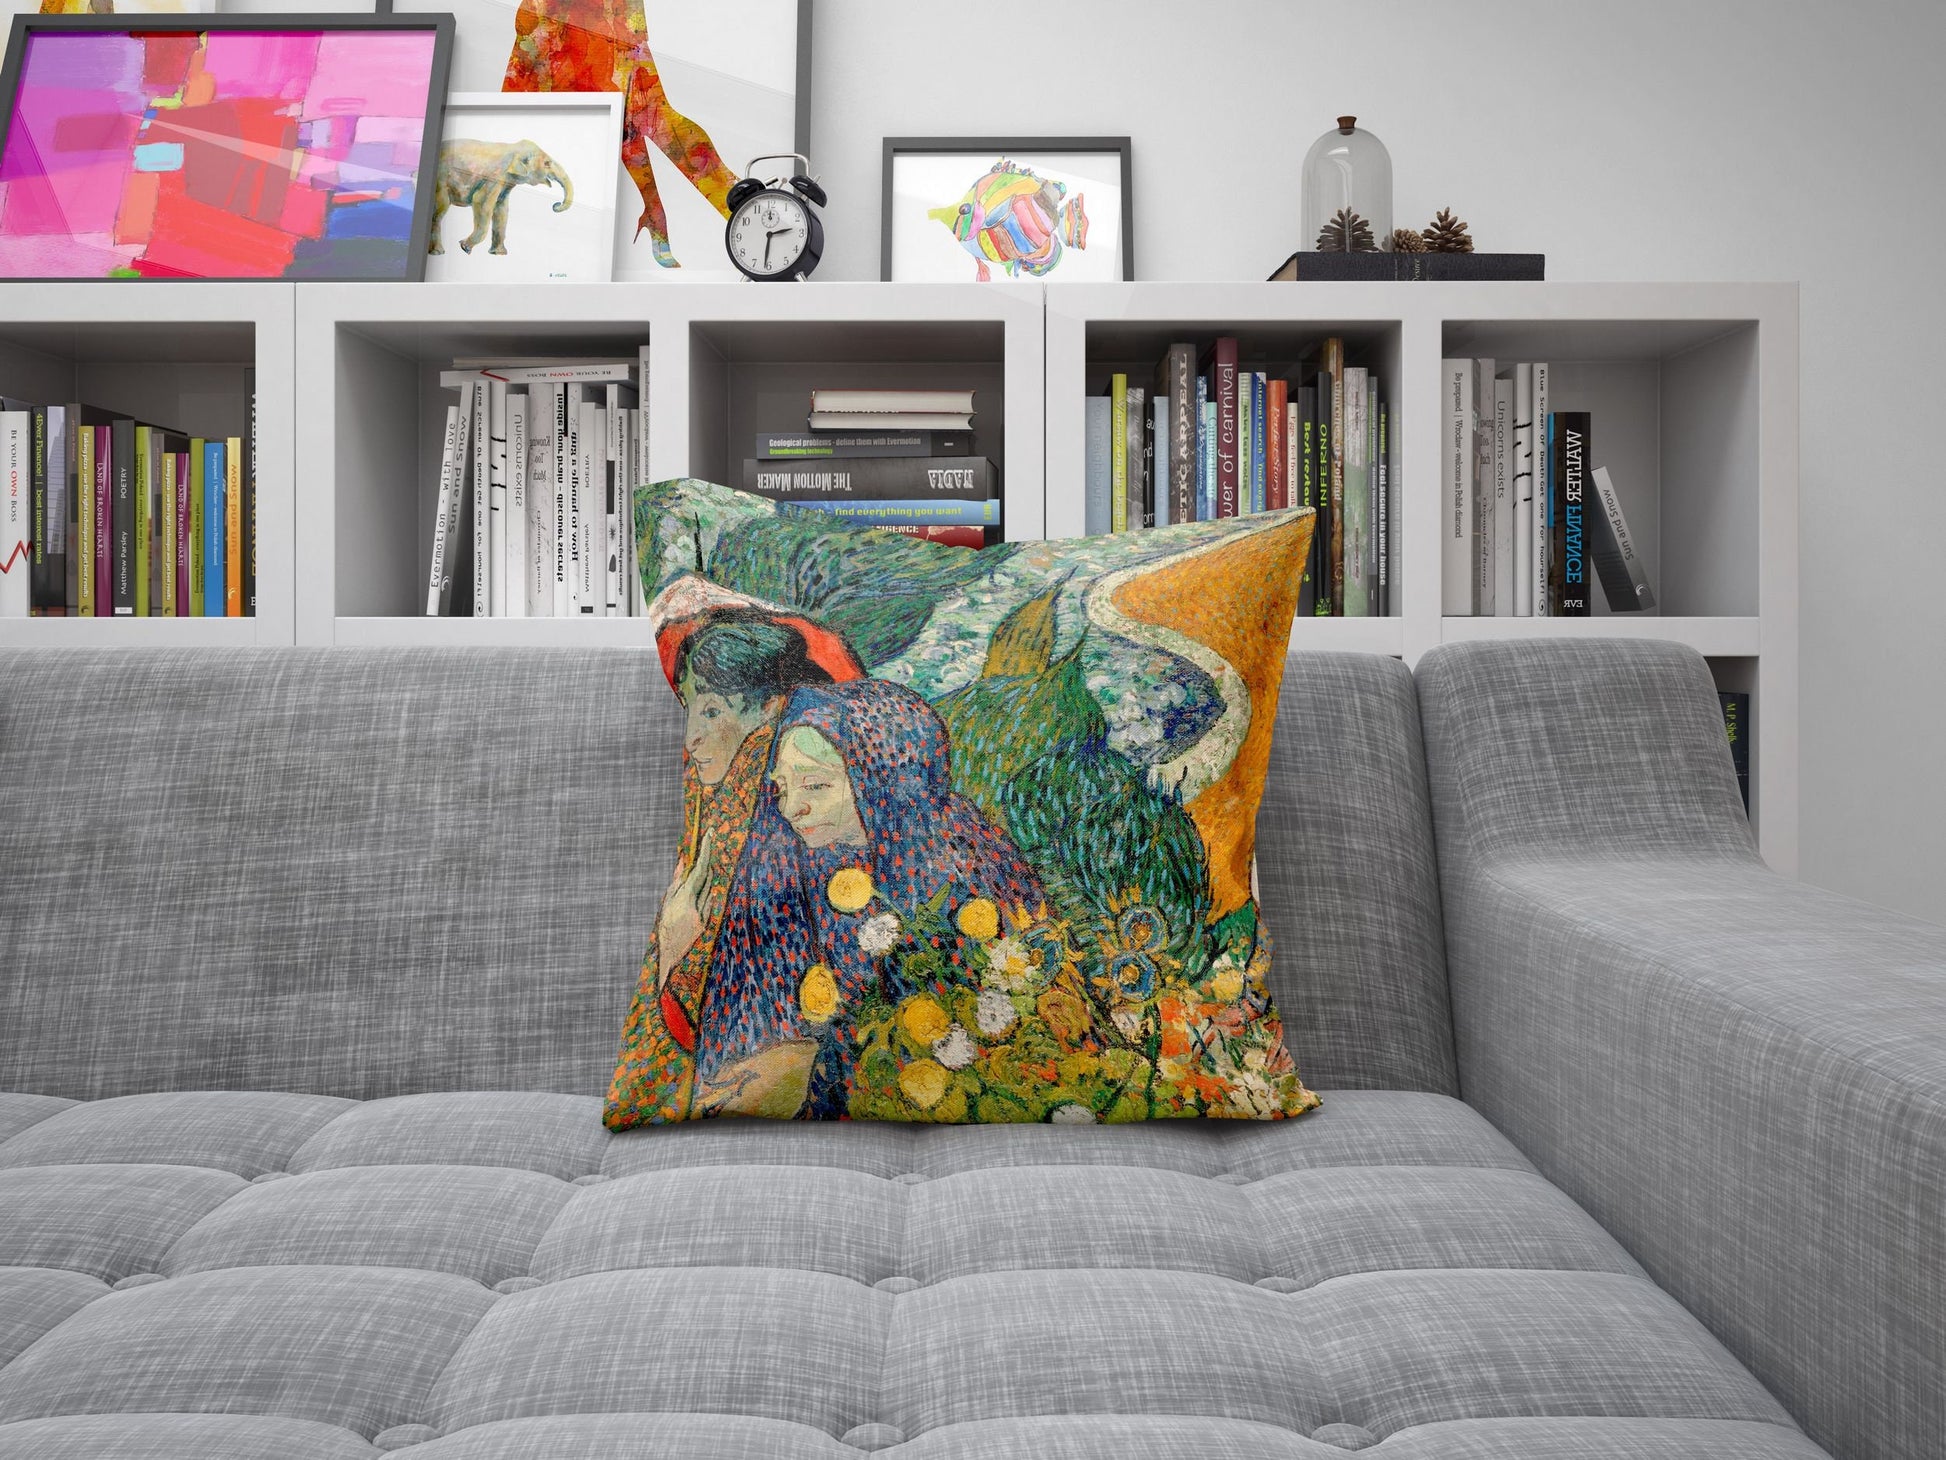 Vincent Van Gogh Famous Art Ladies Of Arles, Throw Pillow, Abstract Throw Pillow, Art Pillow, Contemporary Pillow, 18 X 18 Pillow Covers